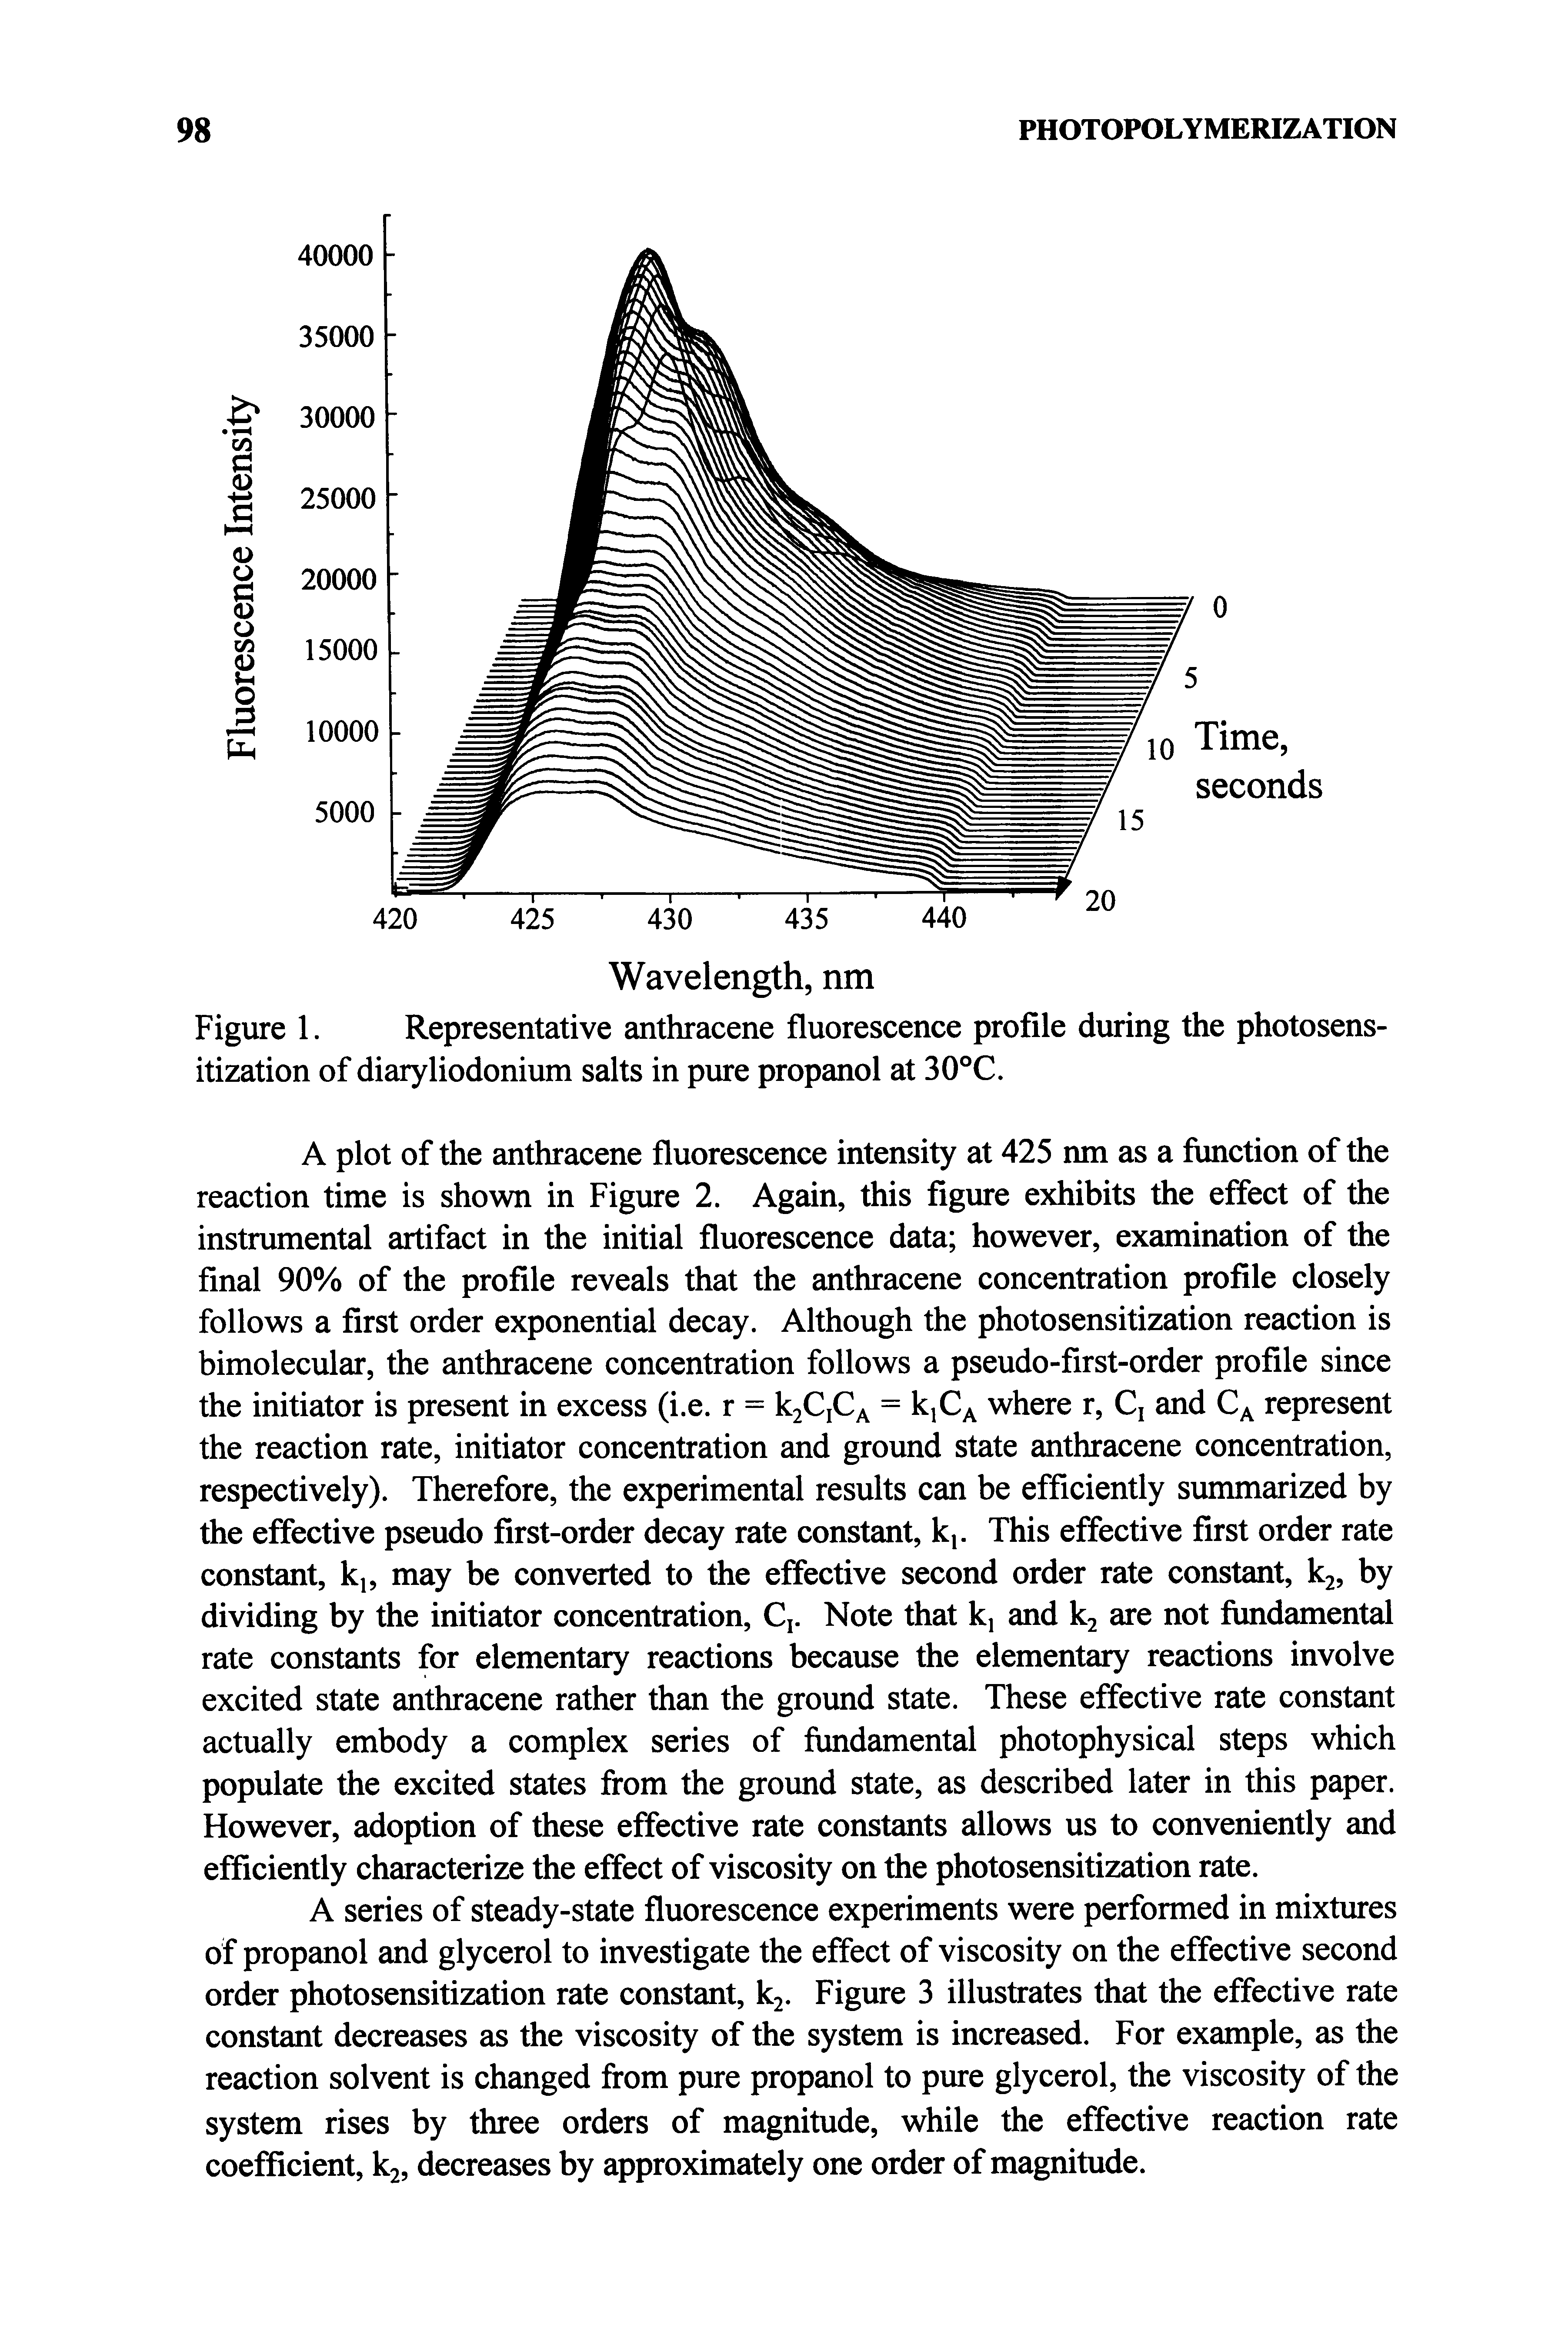 Figure 1. Representative anthracene fluorescence profile during the photosensitization of diaryliodonium salts in pure propanol at 30°C.